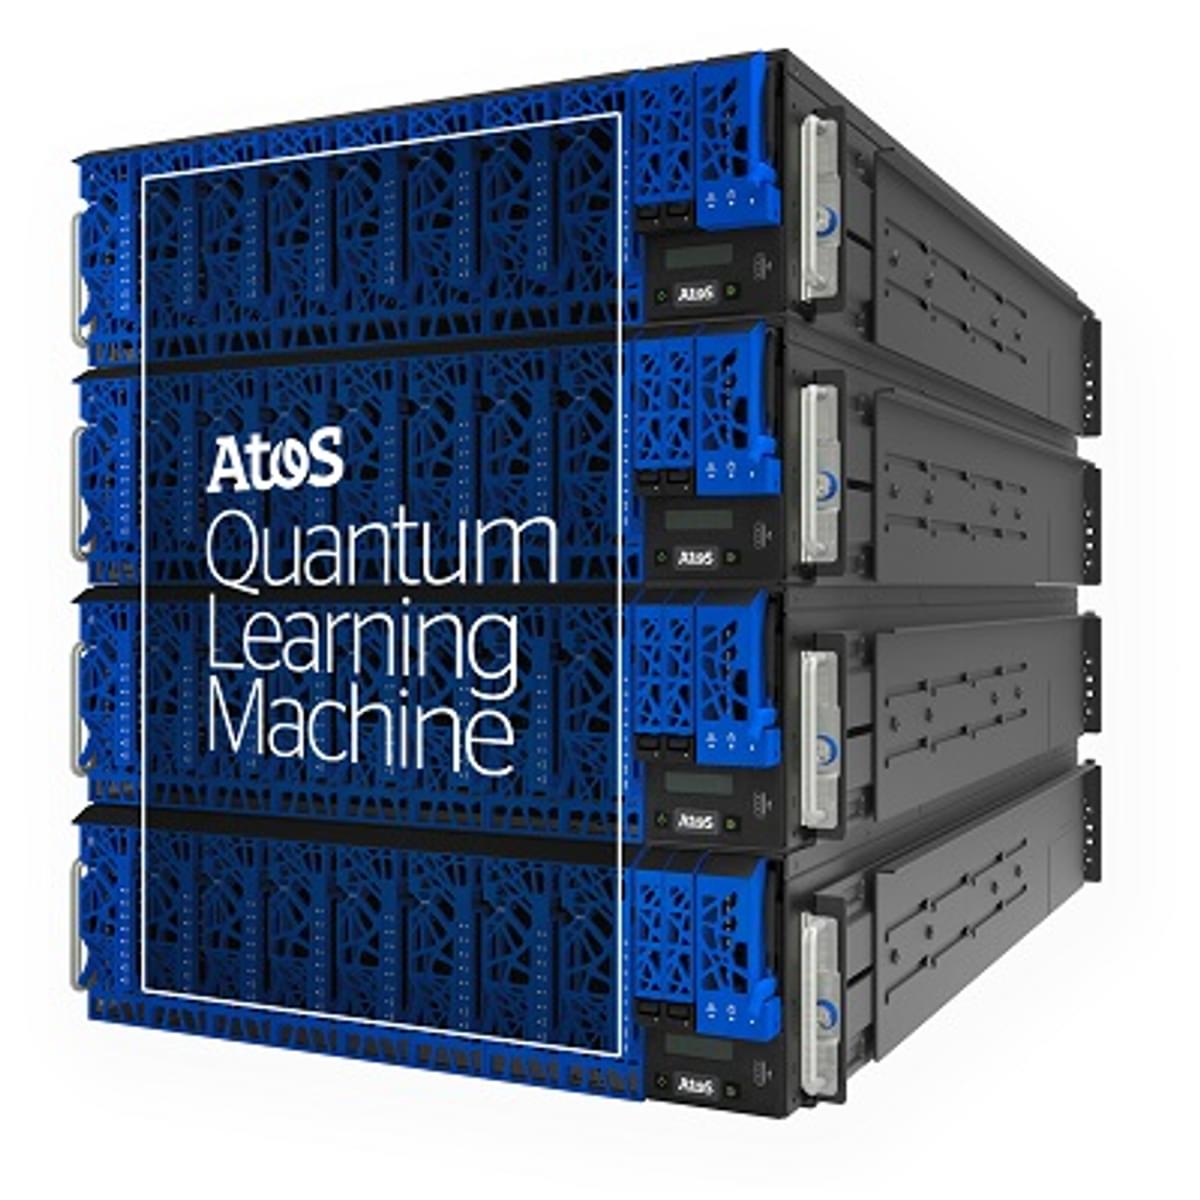 Atos introduceert Quantum Learning Machine supercomputer image